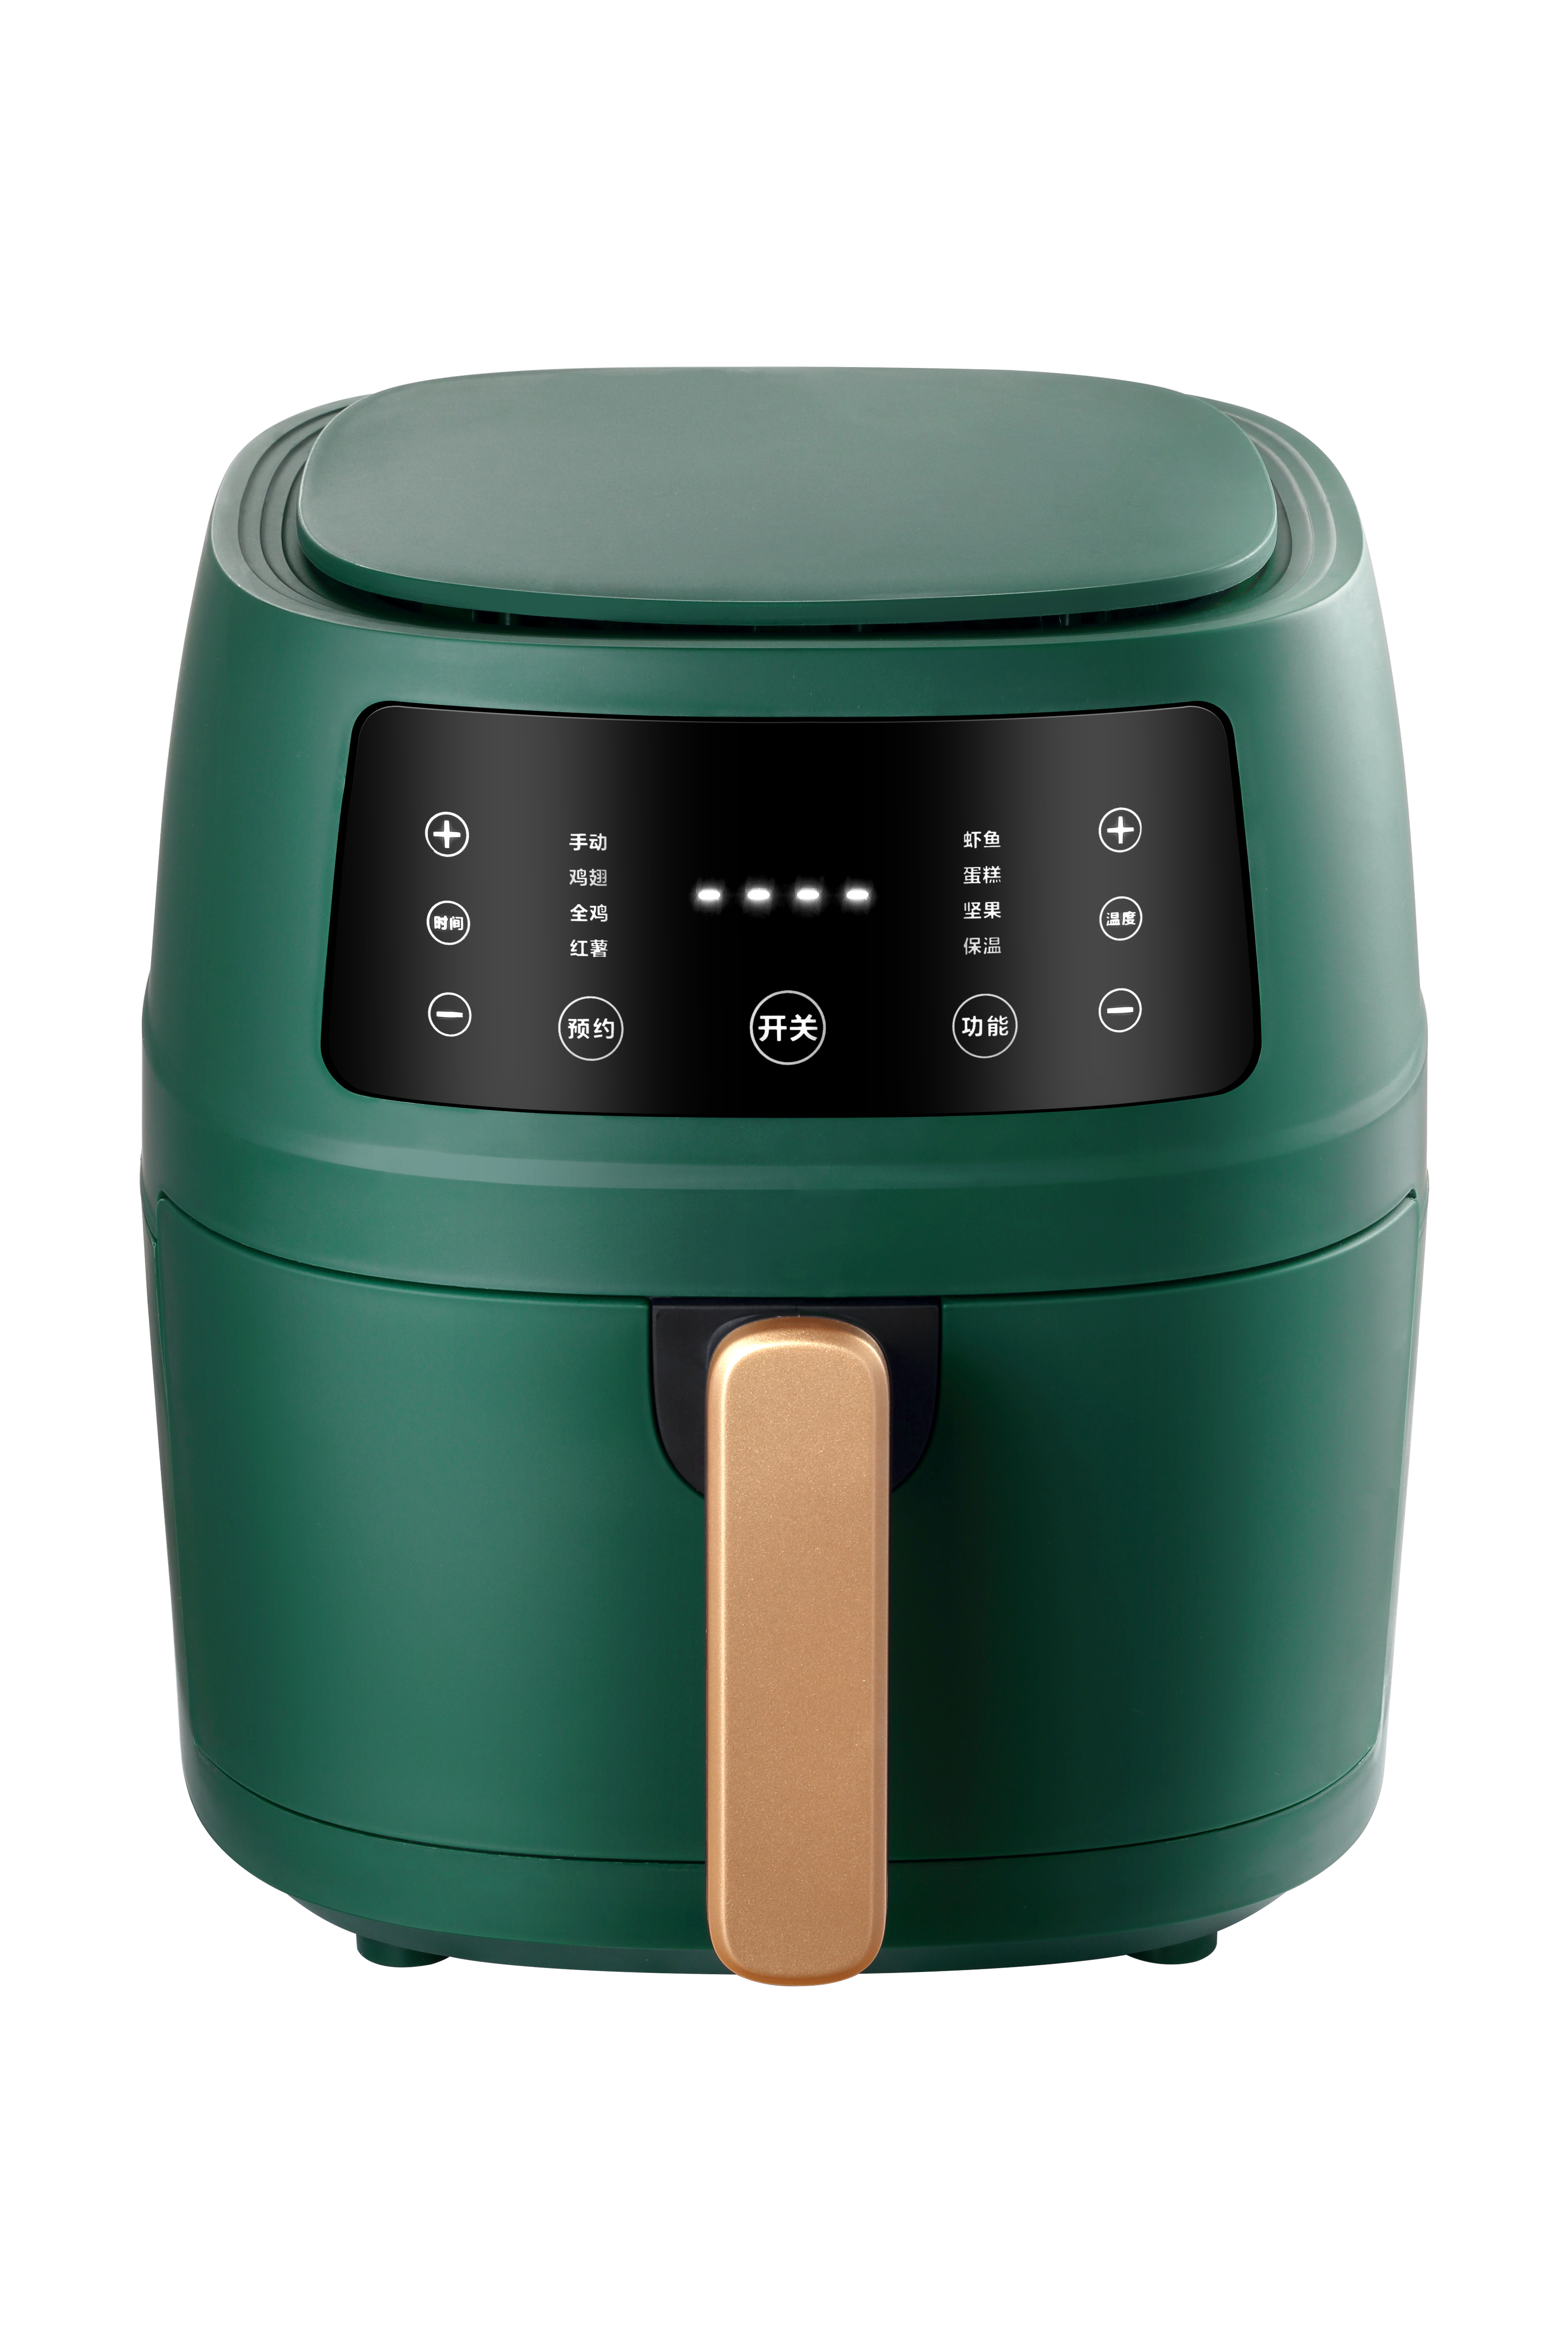 6QT Air Fryer Oven, Instant Pot, Smart Cooking Programs, Digital Touchscreen, Nonstick Safe Basket